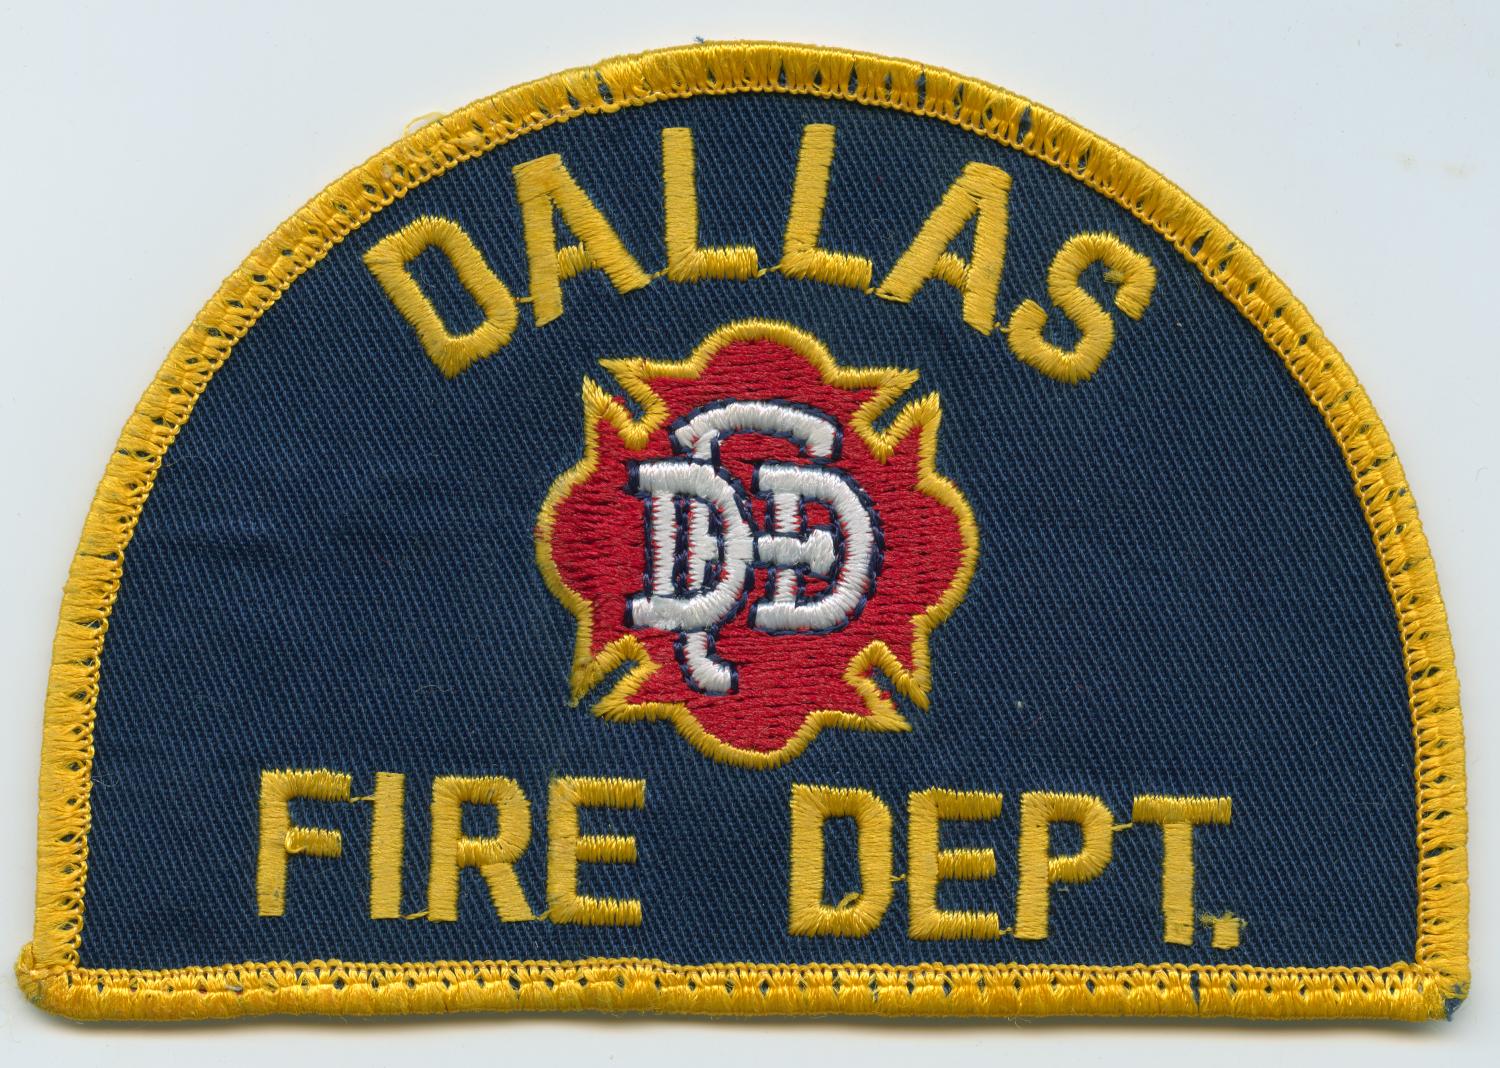 DALWORTHINGTON GARDENS TEXAS TX DPS PUBLIC SAFETY EMS FIRE POLICE PATCH